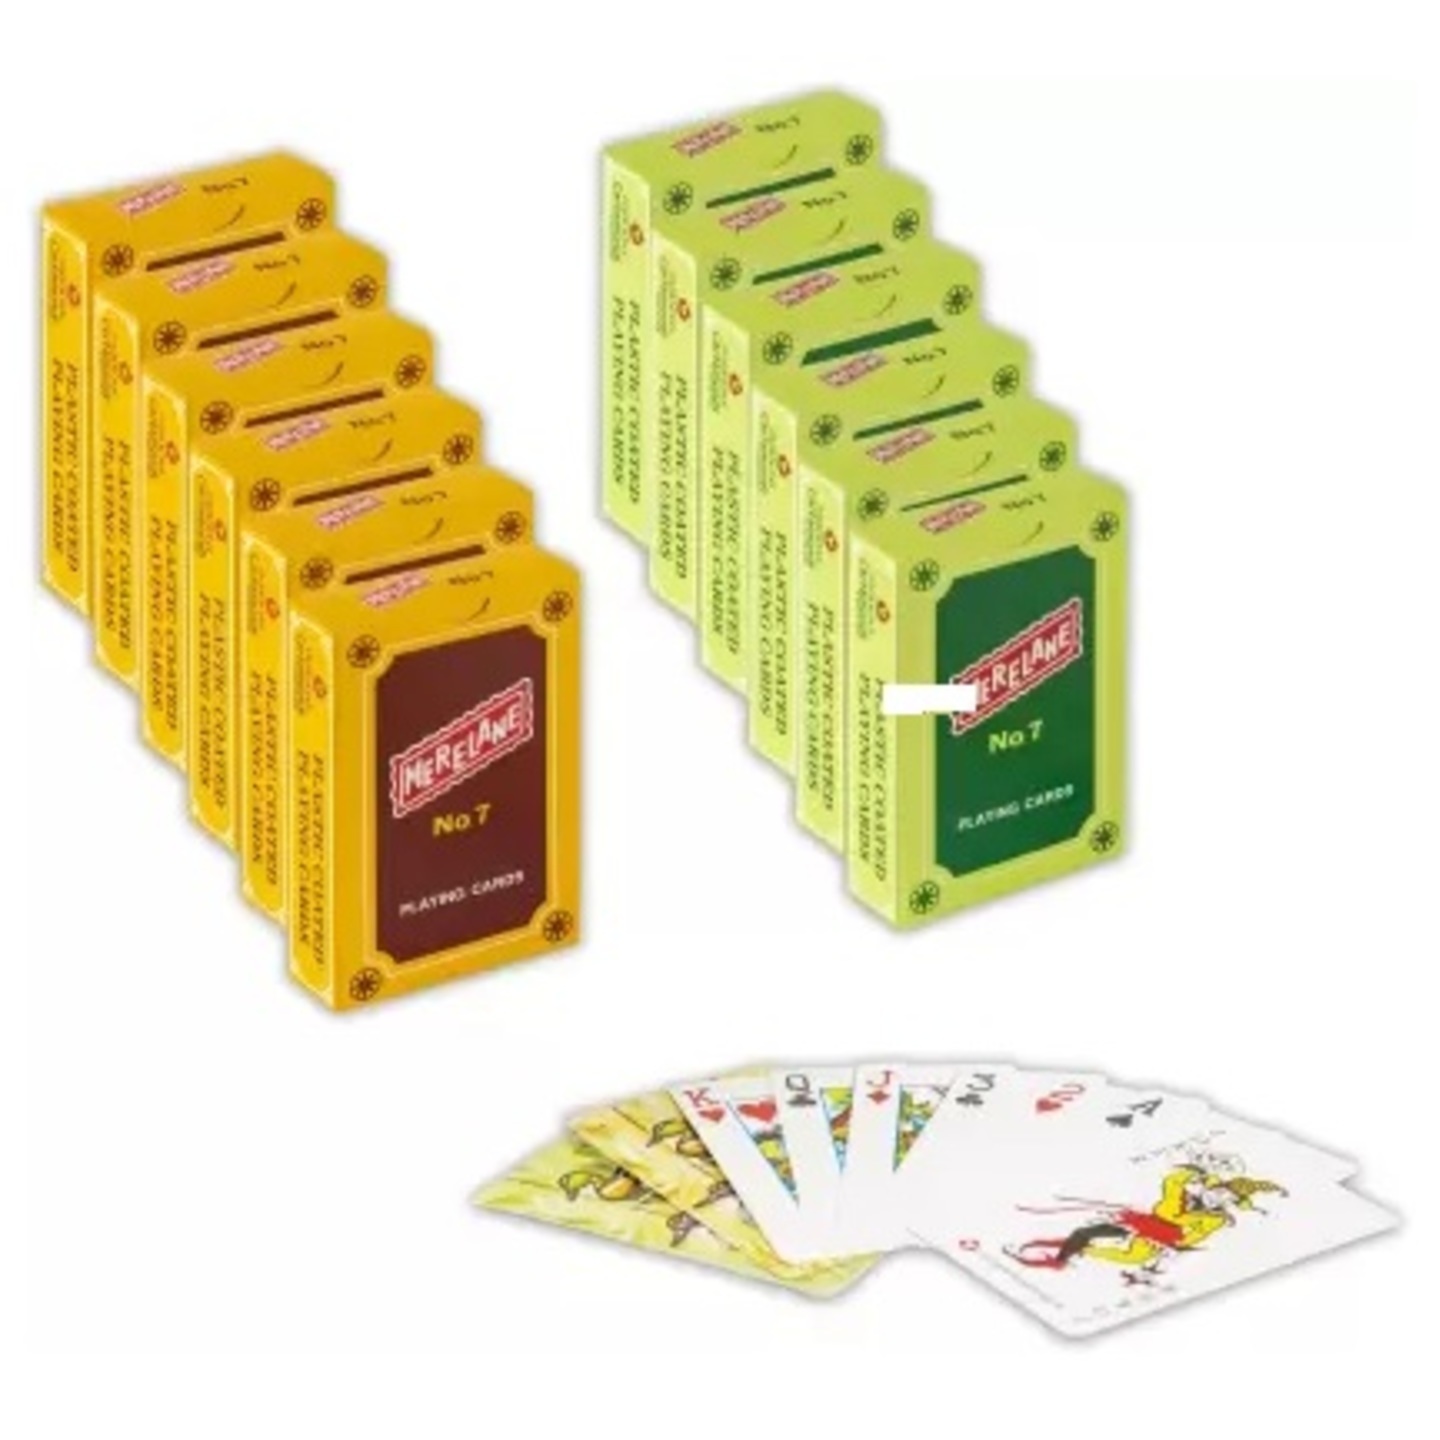 Merelane 7 Playing Cards Box of 55 cards